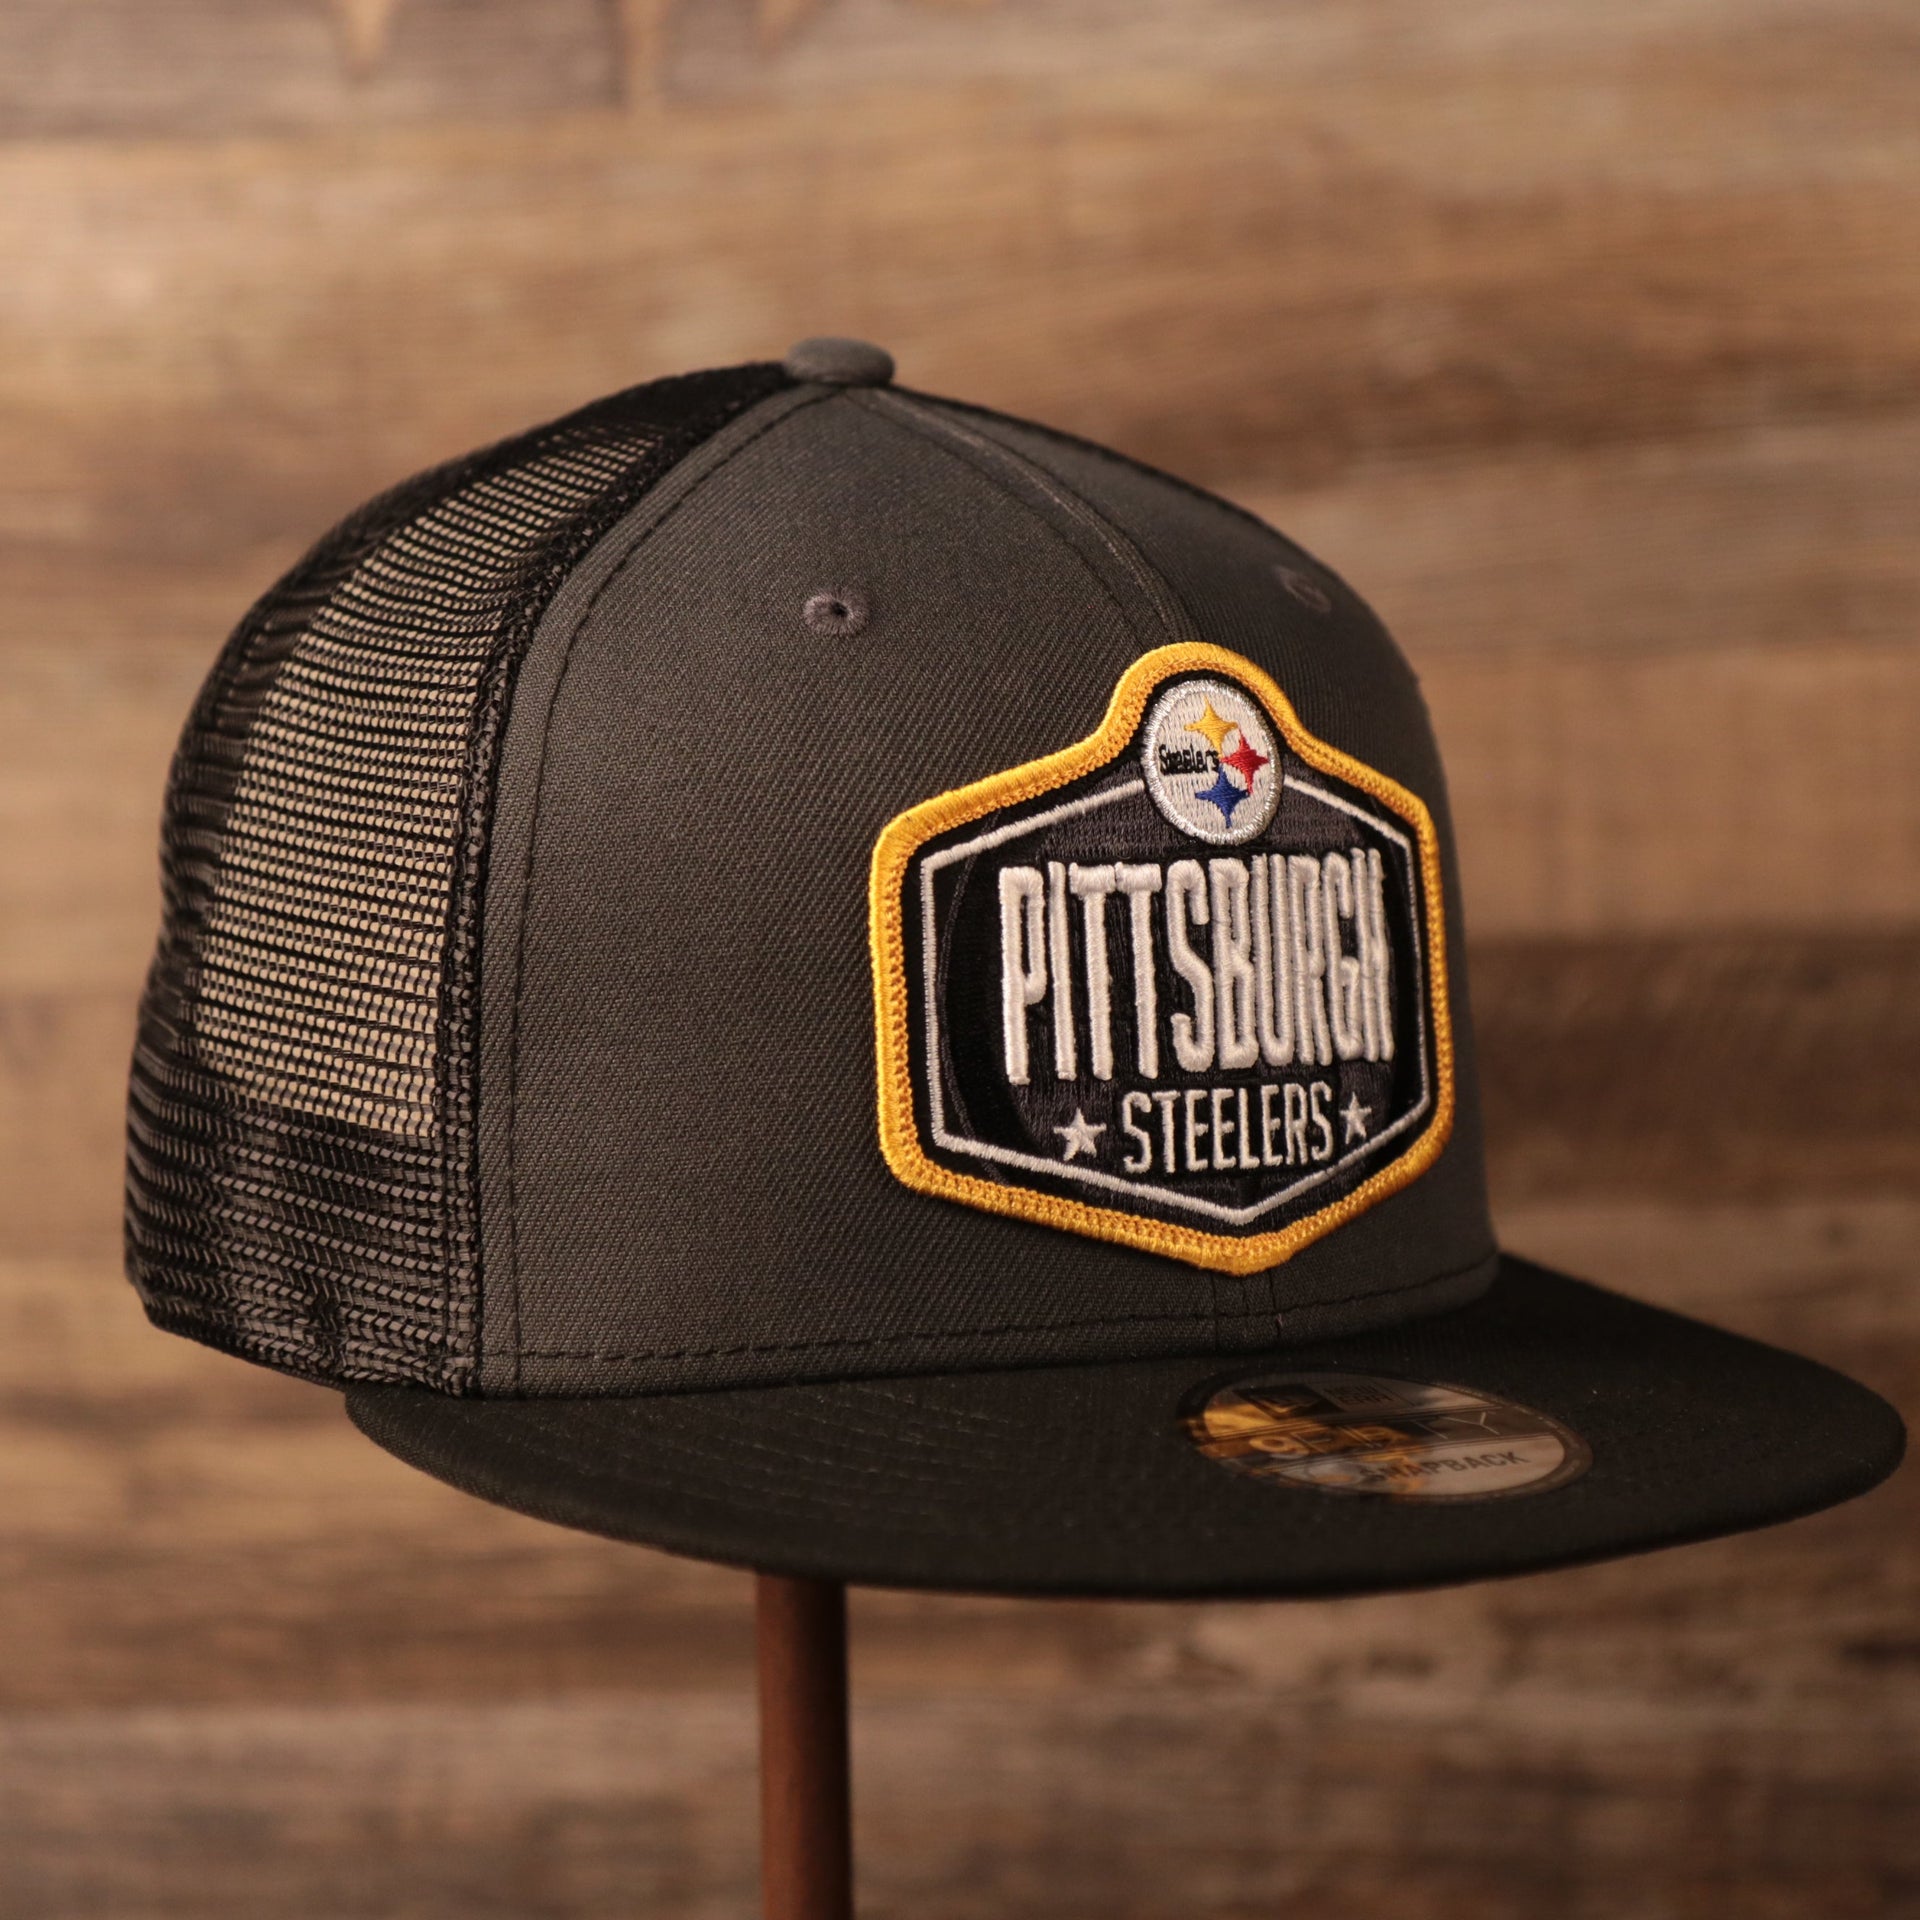 The gray/black meshback New Era 2021 NFL draft Trucker Hat for the Steelers.